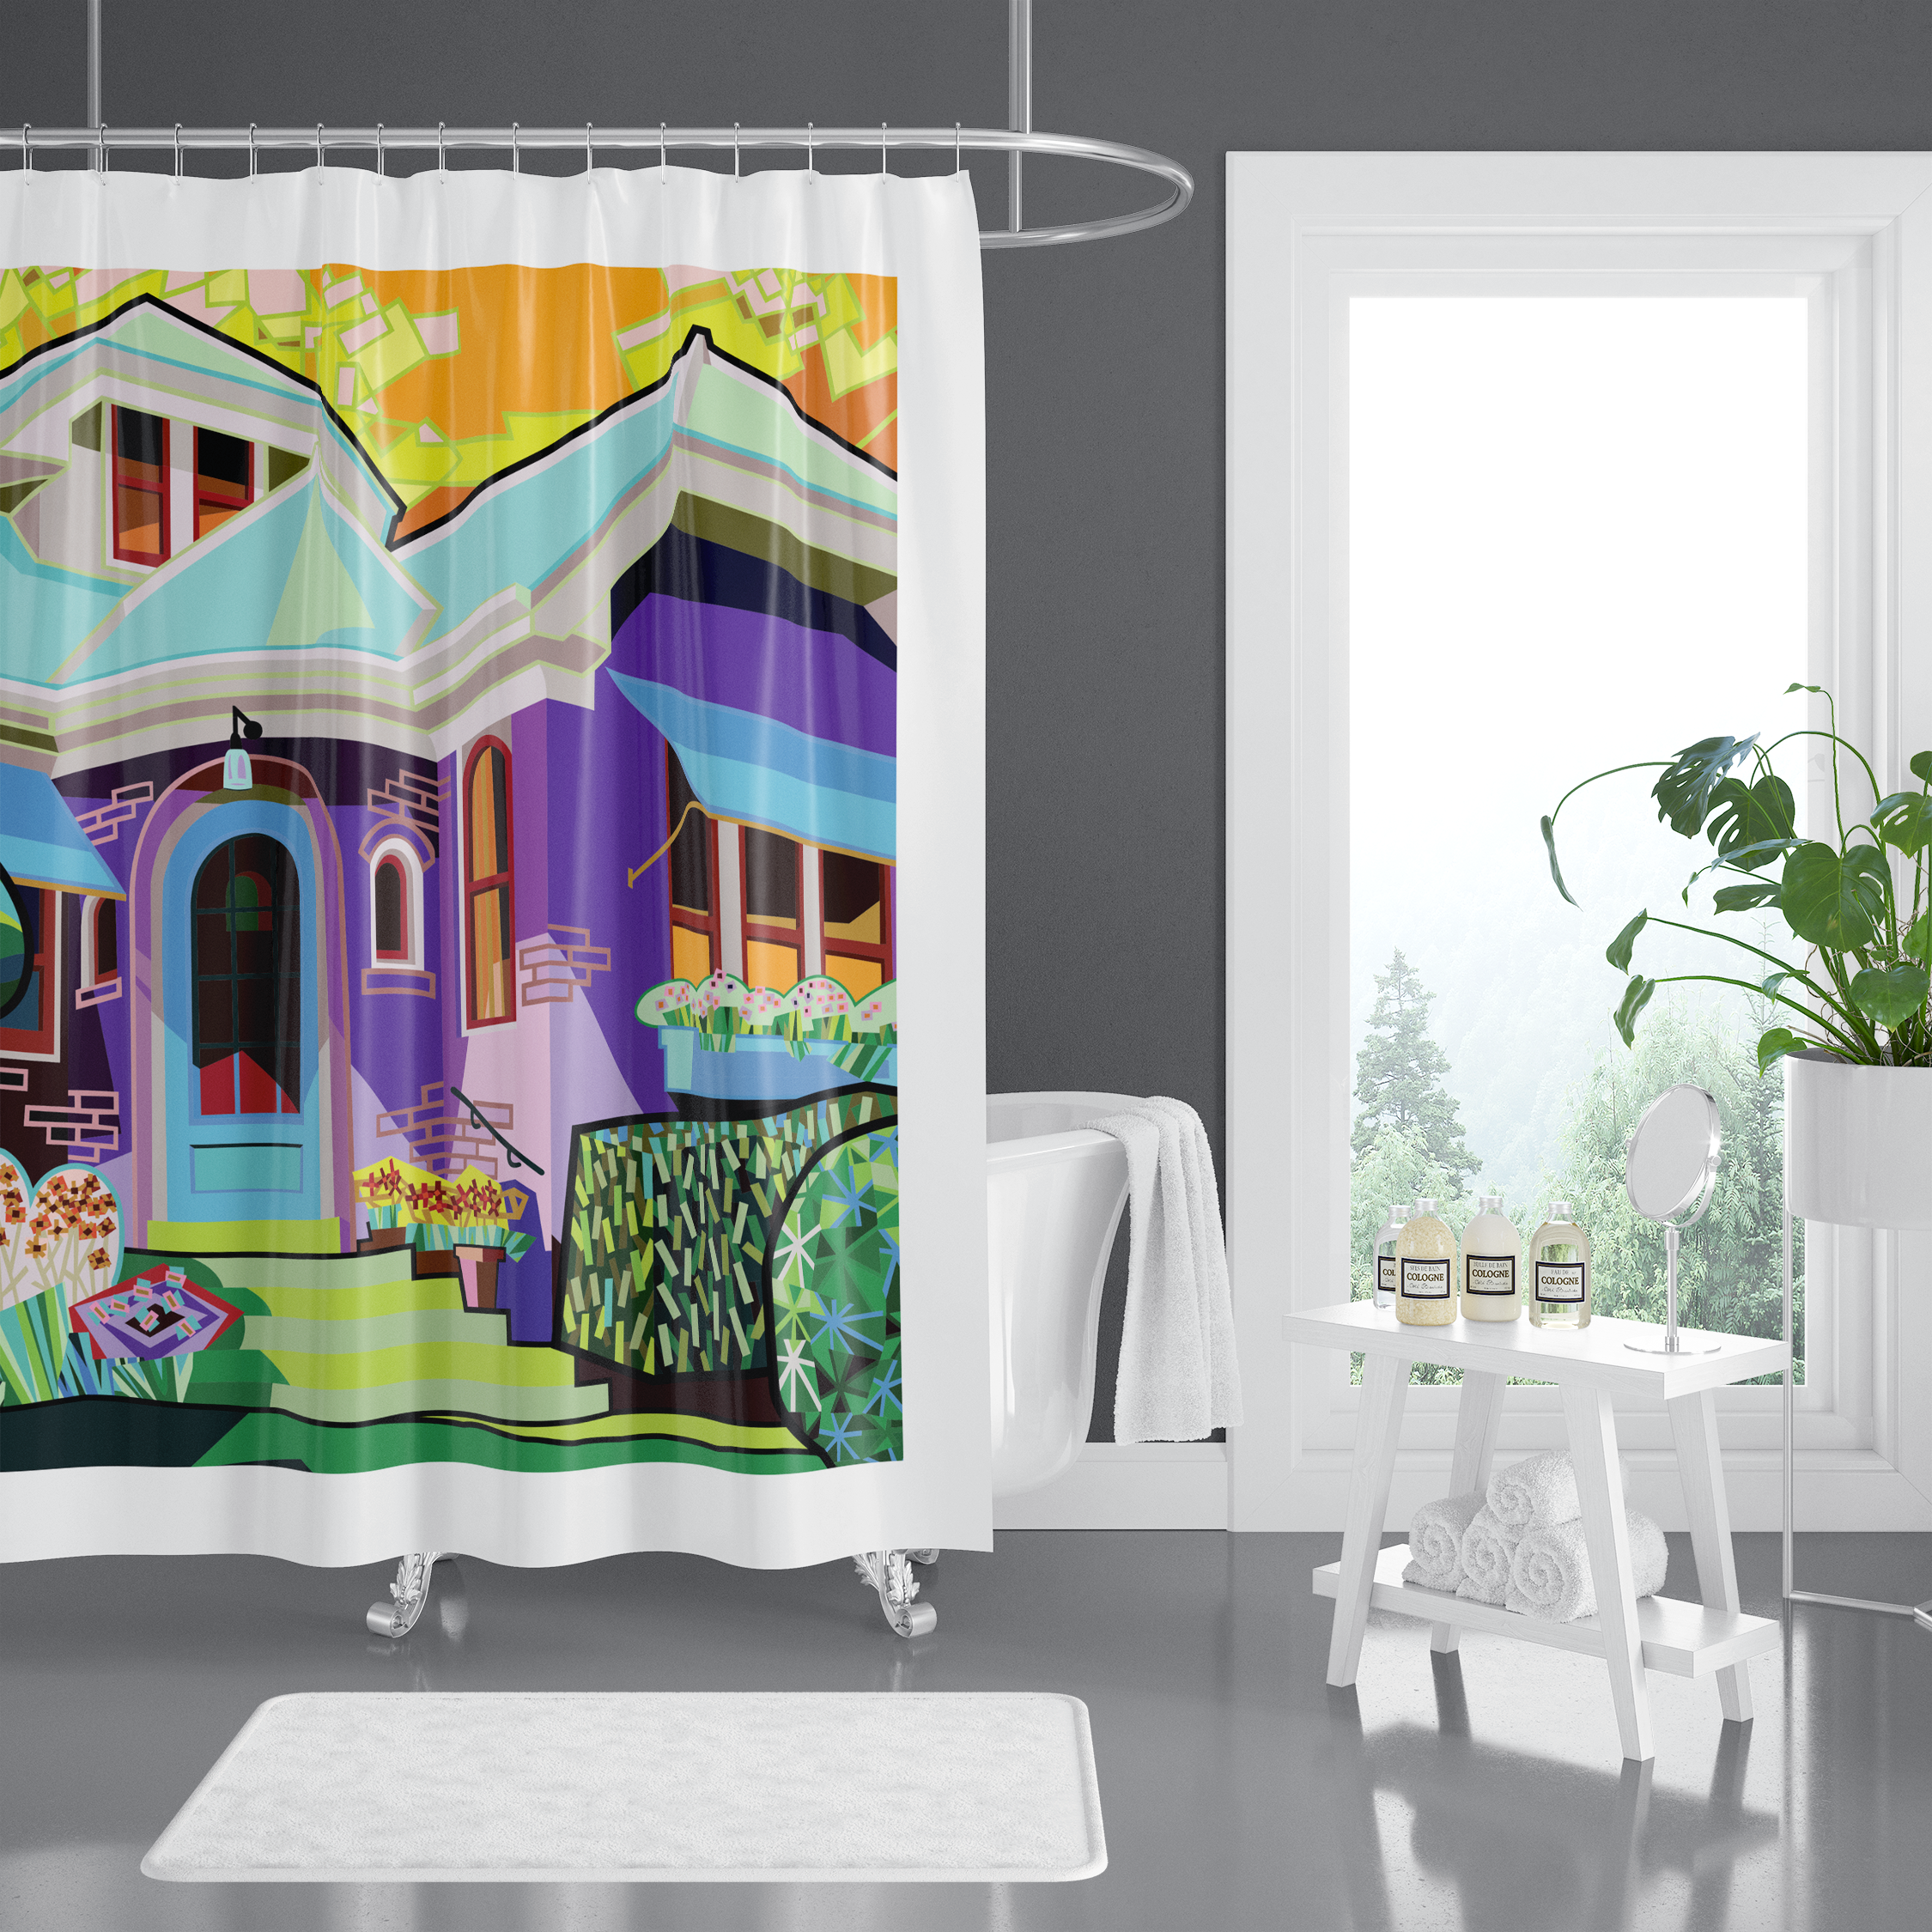 designer shower curtain in modern bathroom. neighborhood scene. architectural scene. 